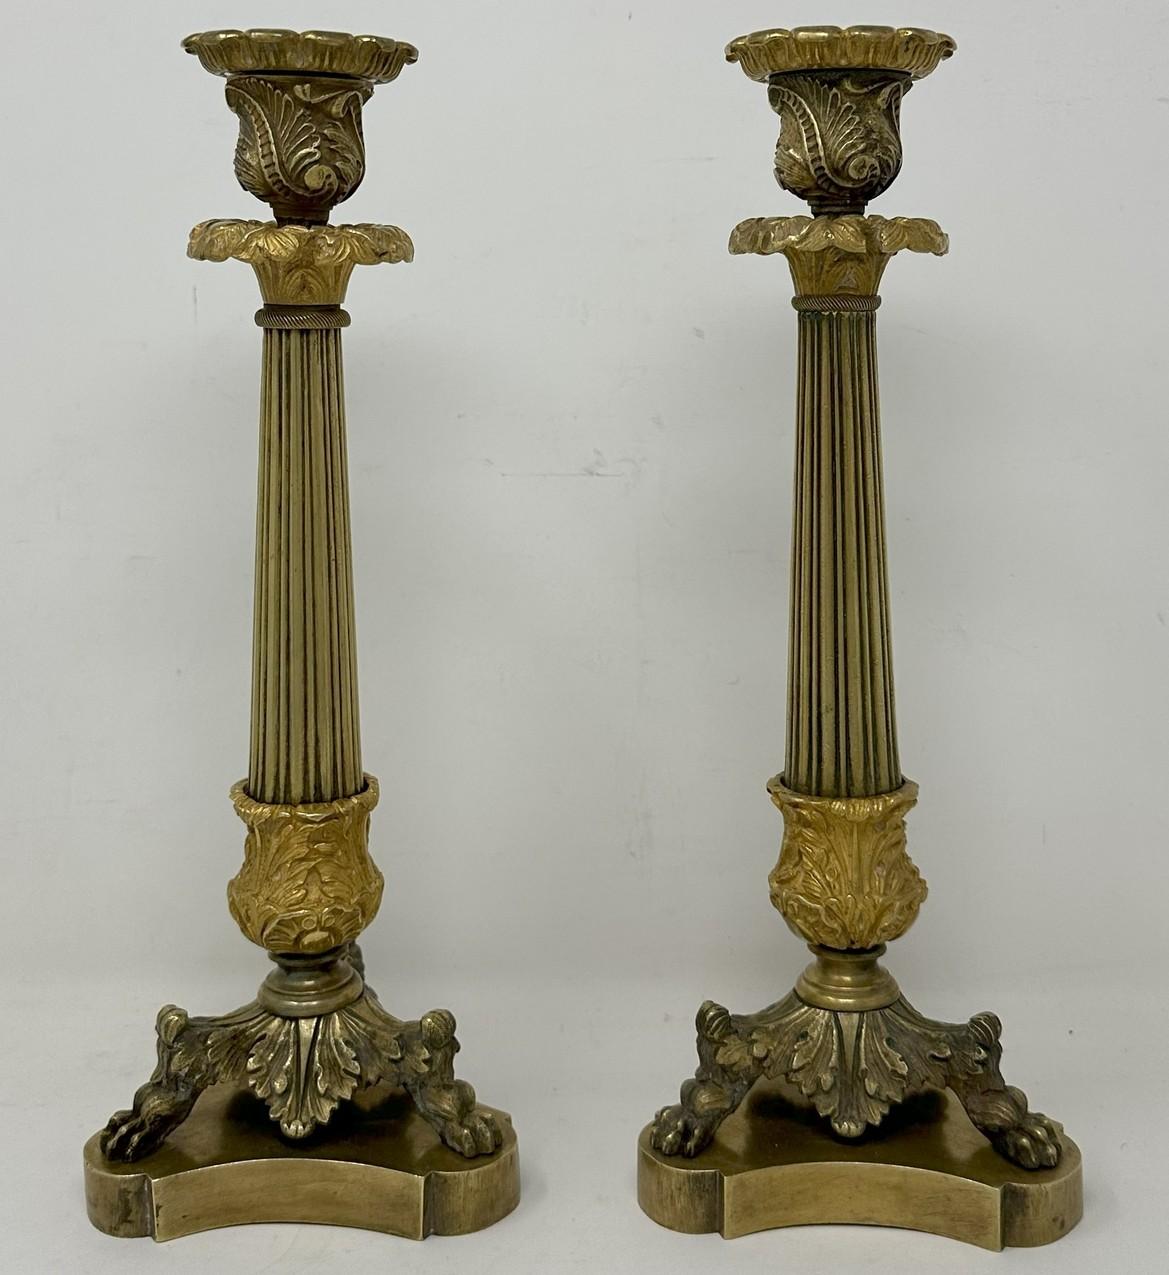 Cast Antique Pair French Ormolu Bronze Dore Victorian Candlesticks Candelabra 19th Ct